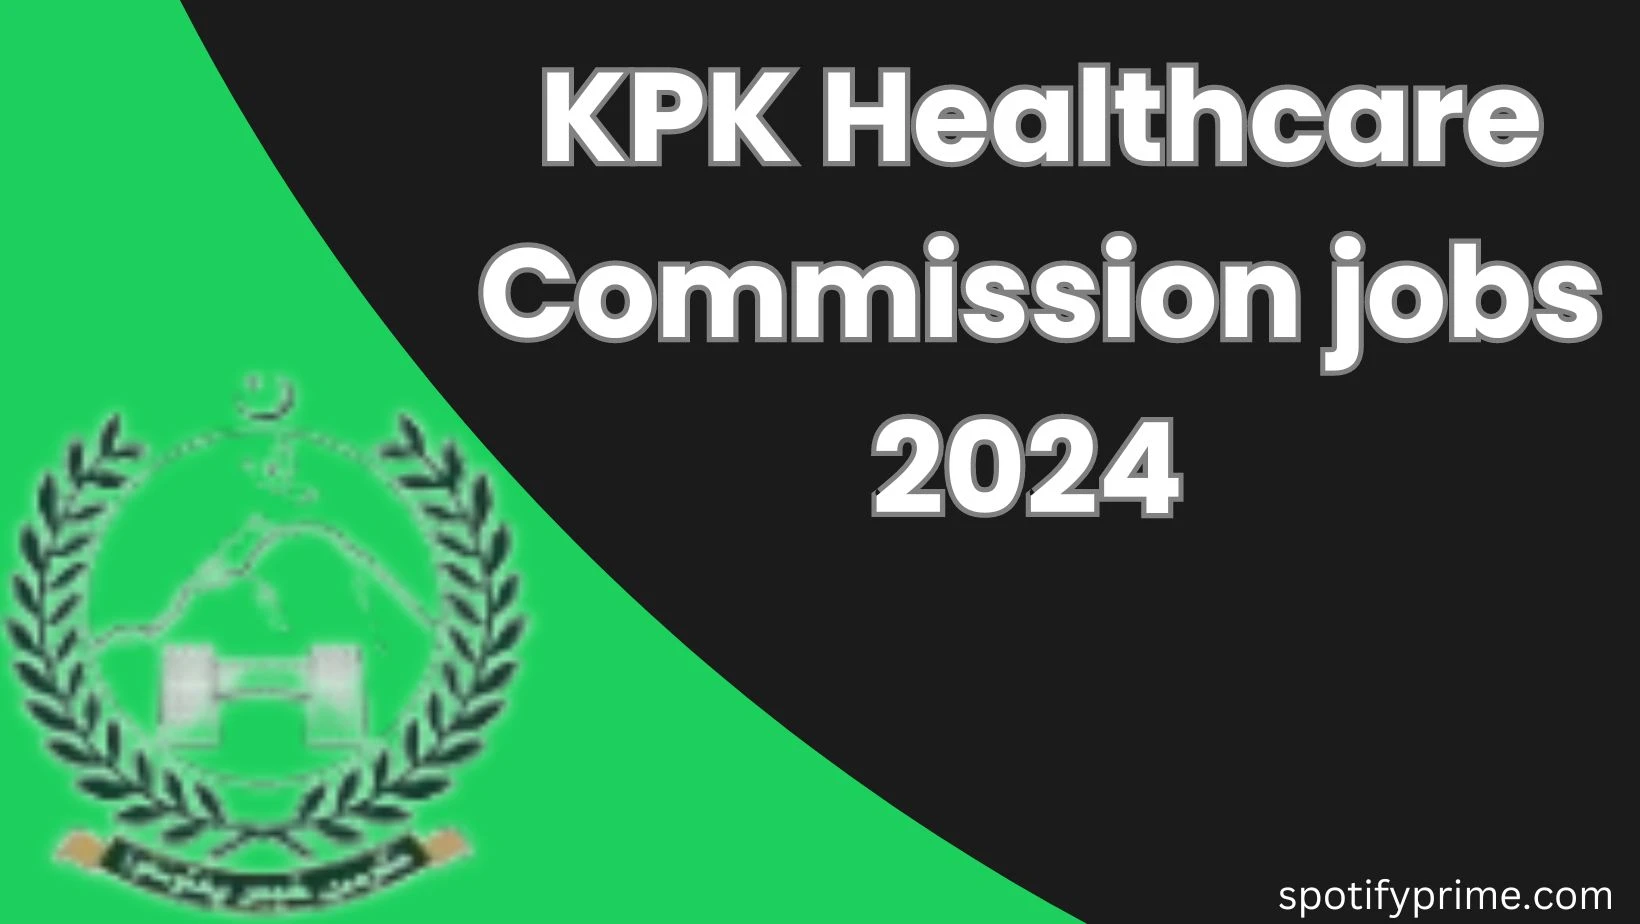 KPK healthcare Commission Jobs